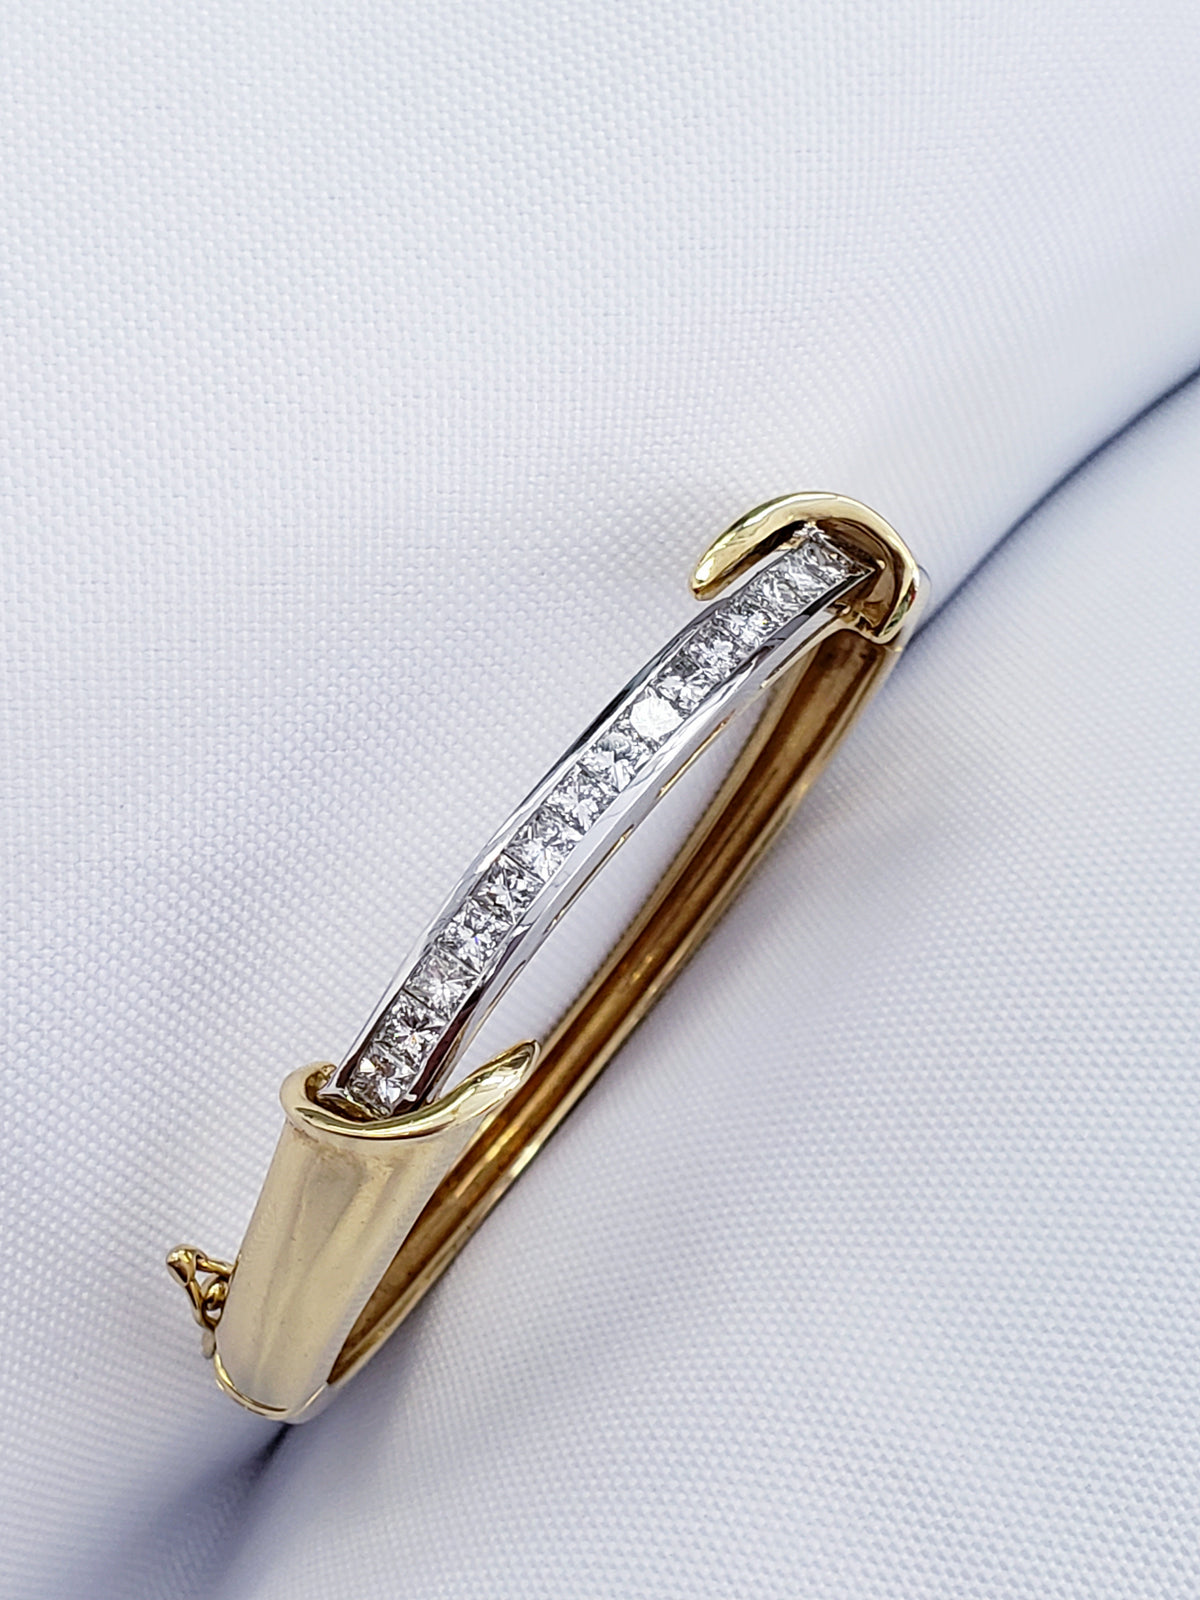 Princess Cut Channel Set Two Tone Bangle Bracelet made in 14-karat Gold